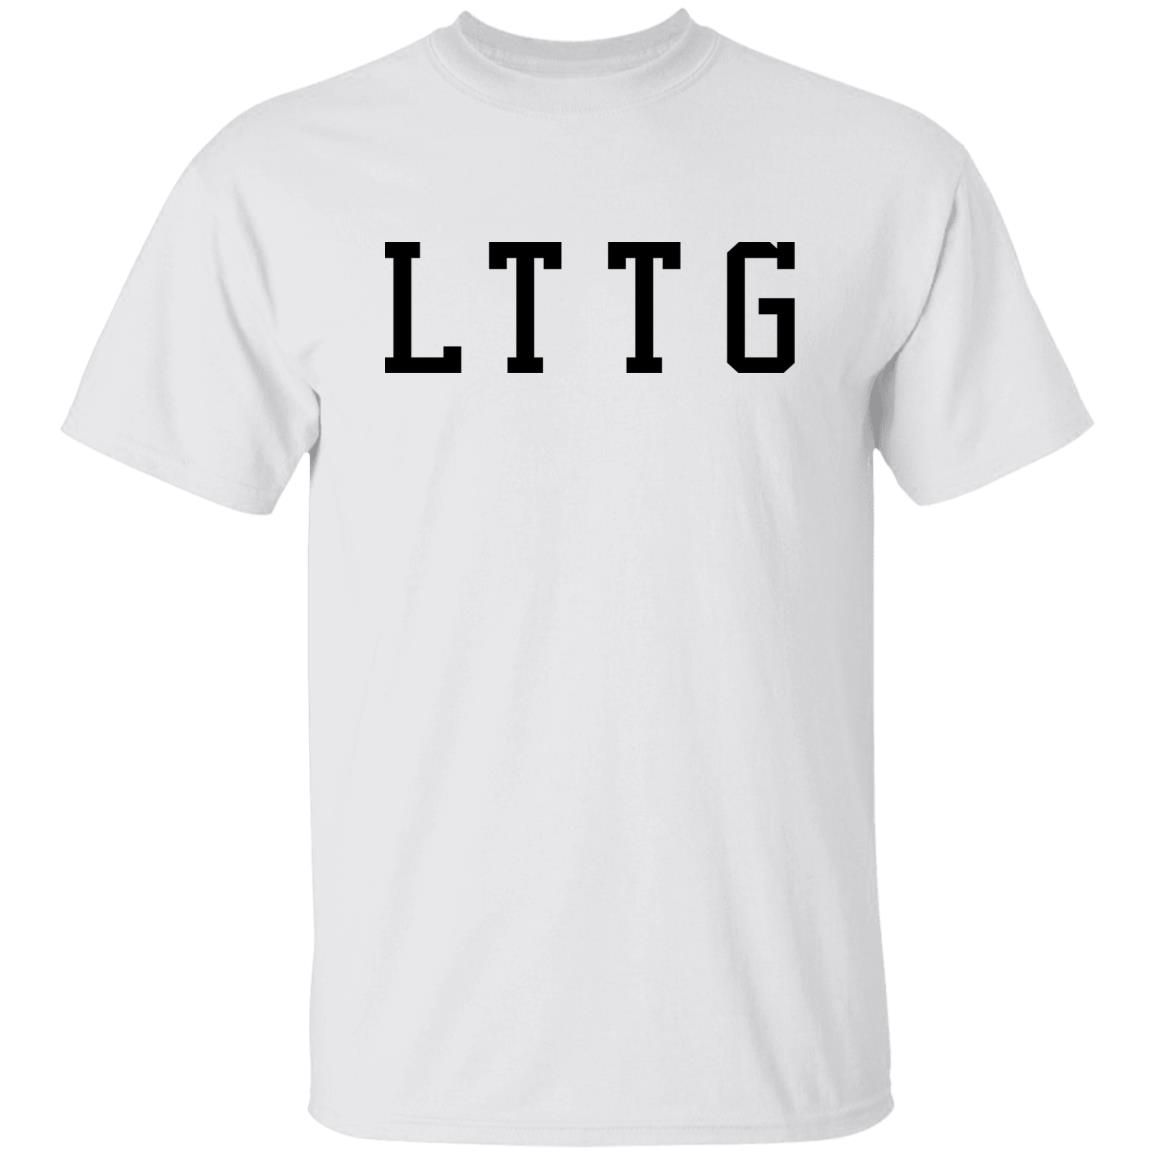 Dak Prescott LTTG Shirt, T-Shirt, Hoodie, Tank Top, Sweatshirt